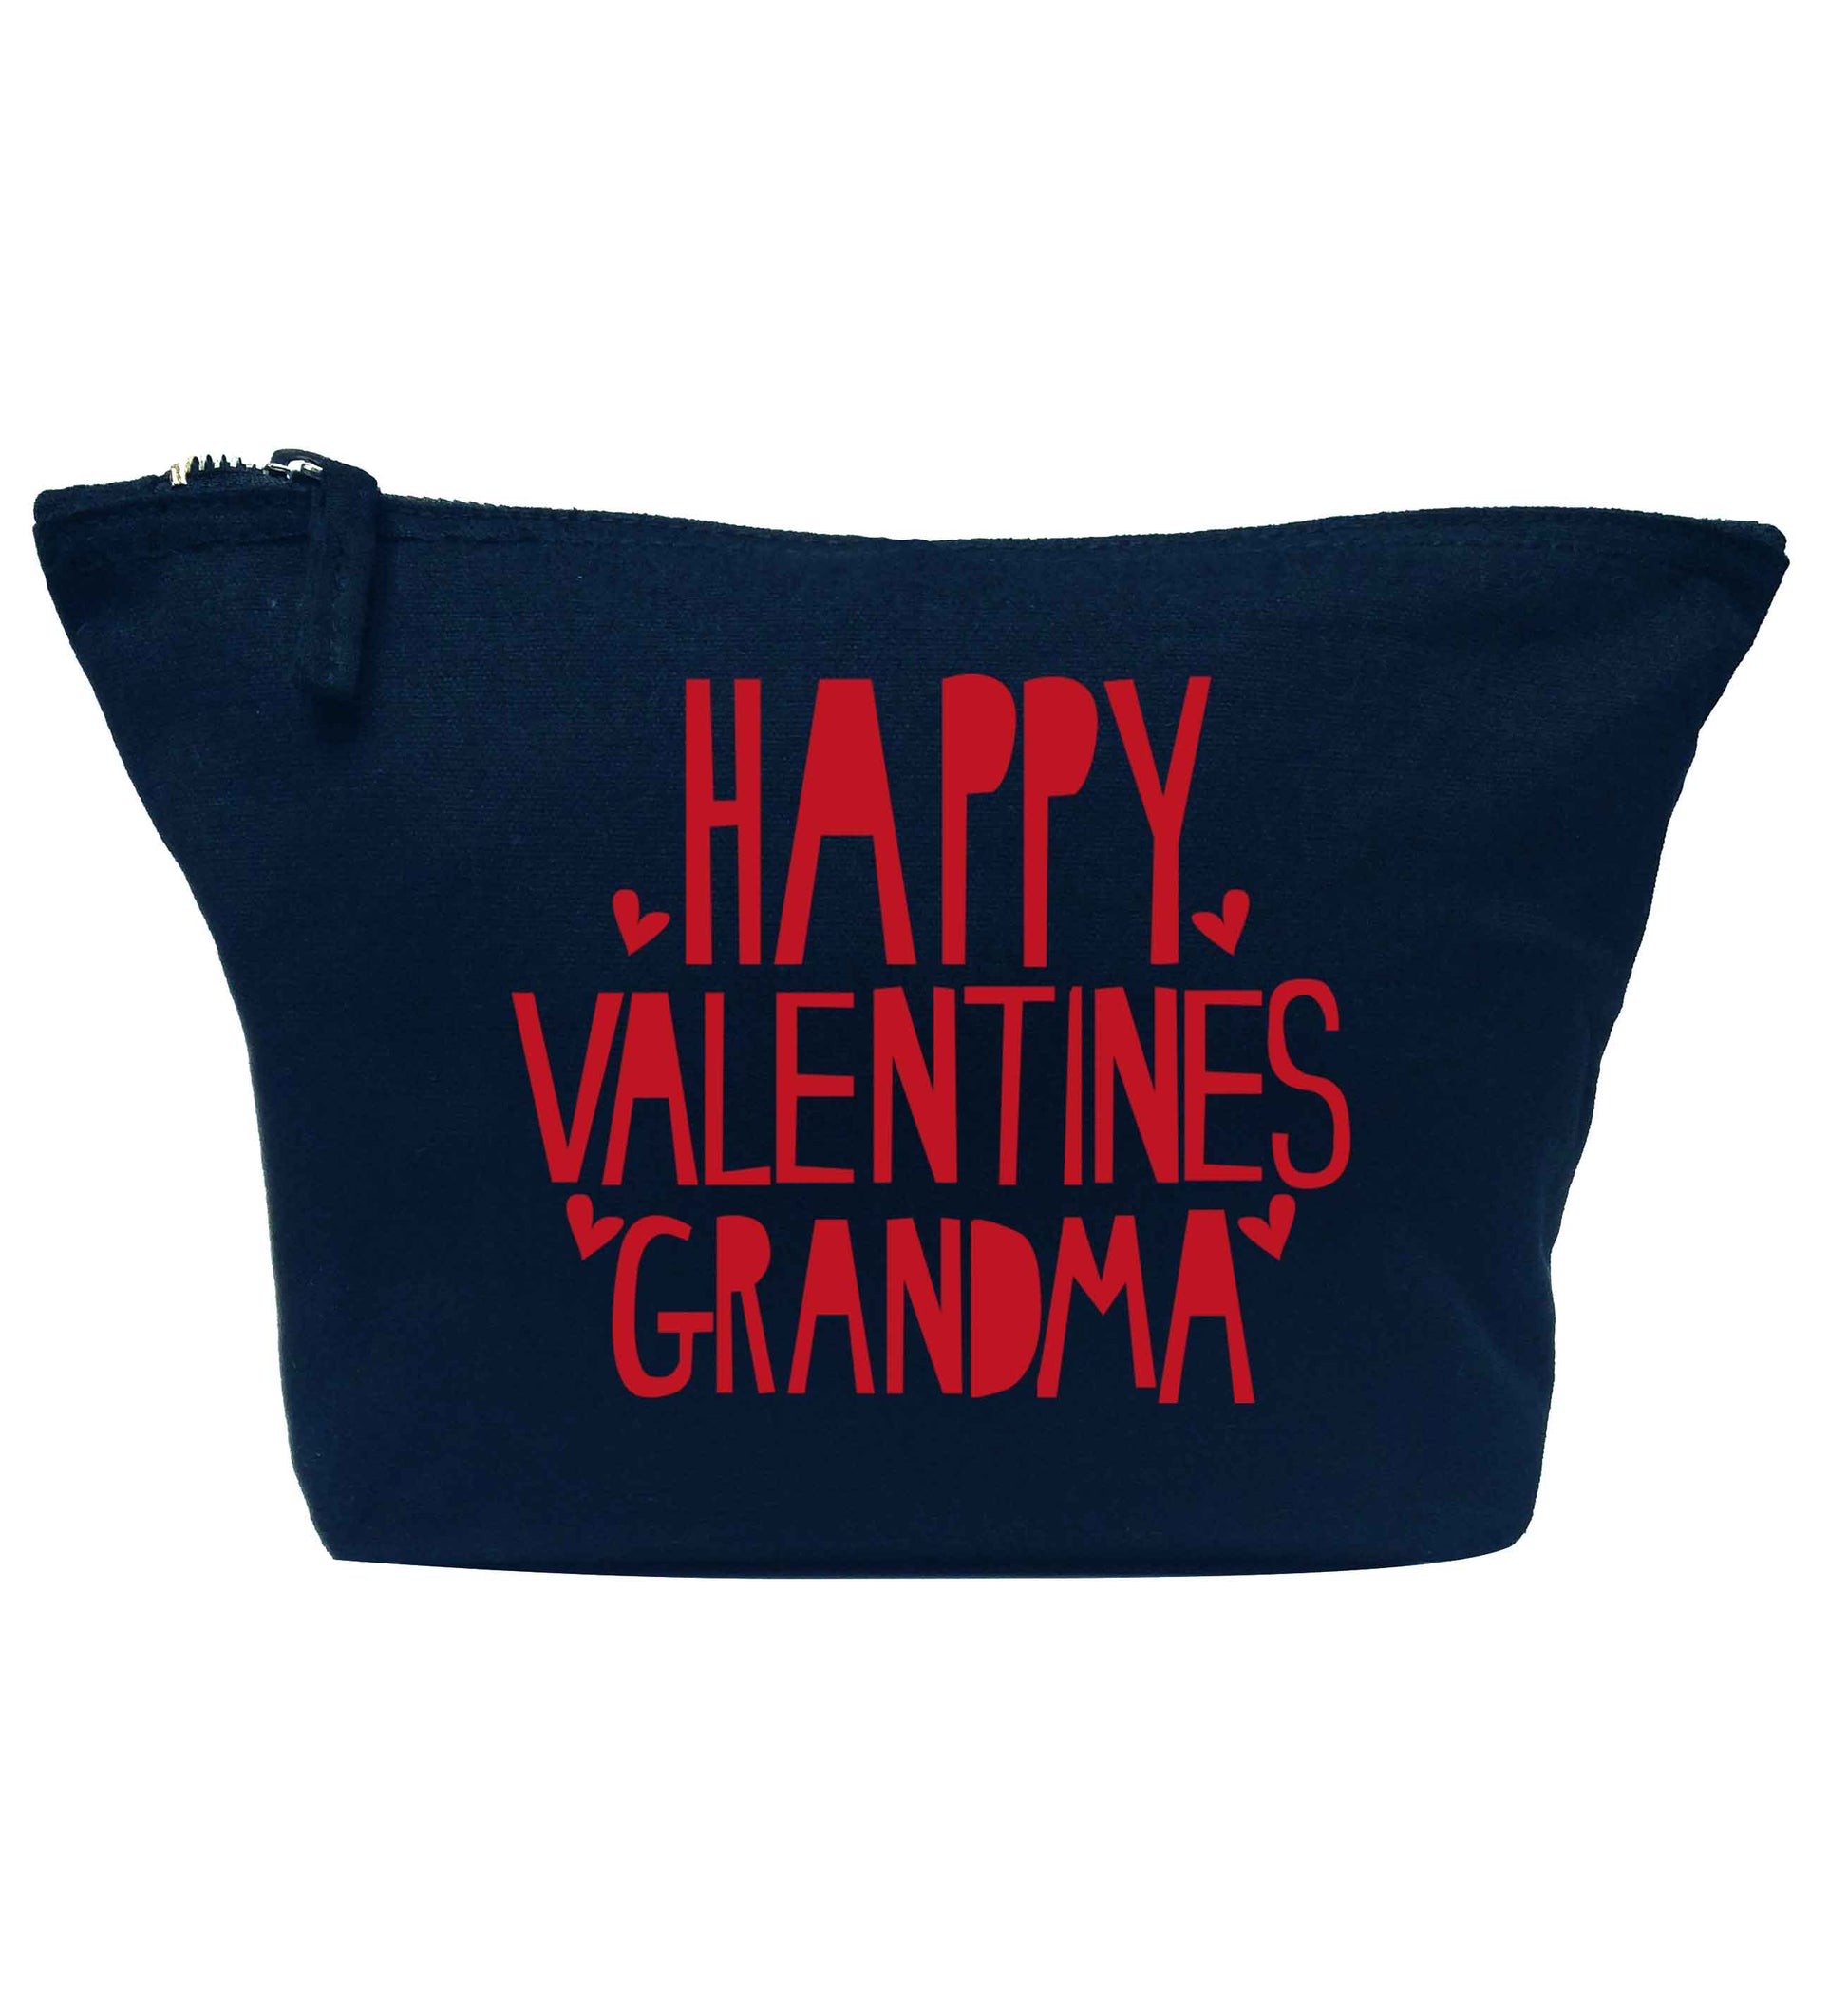 Happy valentines grandma navy makeup bag